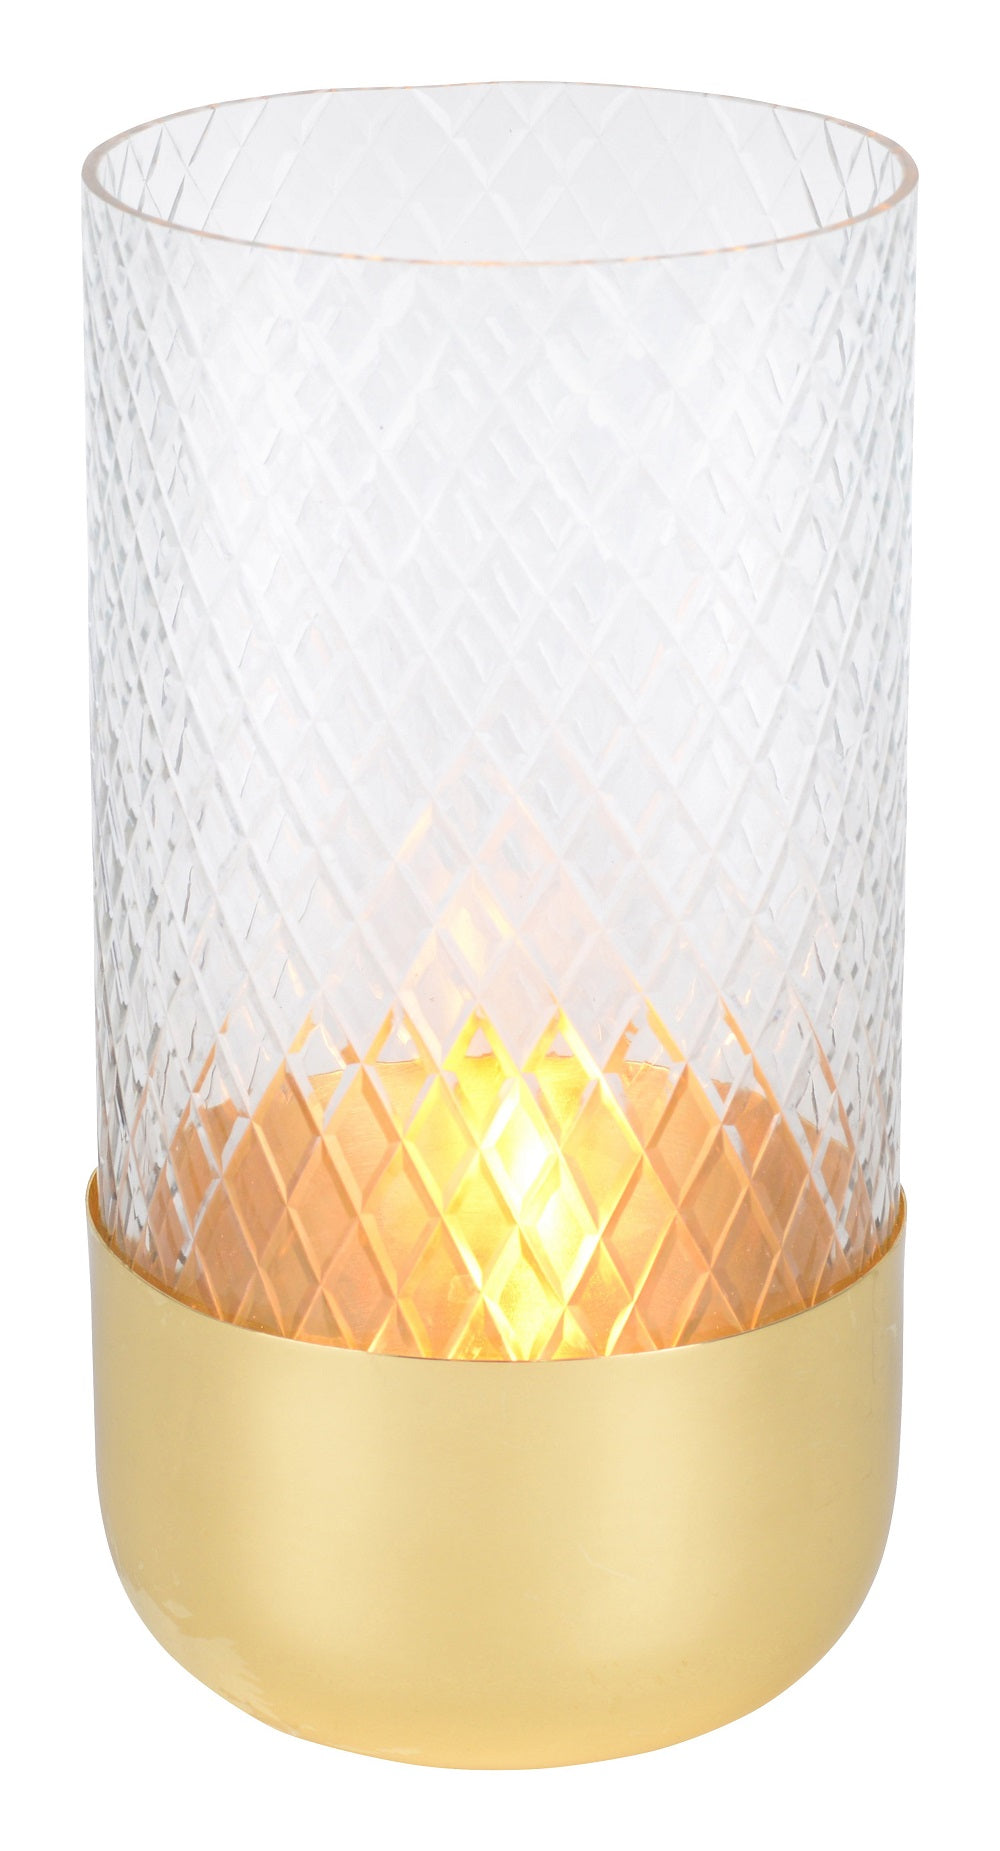 Windlicht Deko Vase Glas/Metall klar/gold Marylebone 15,5cm